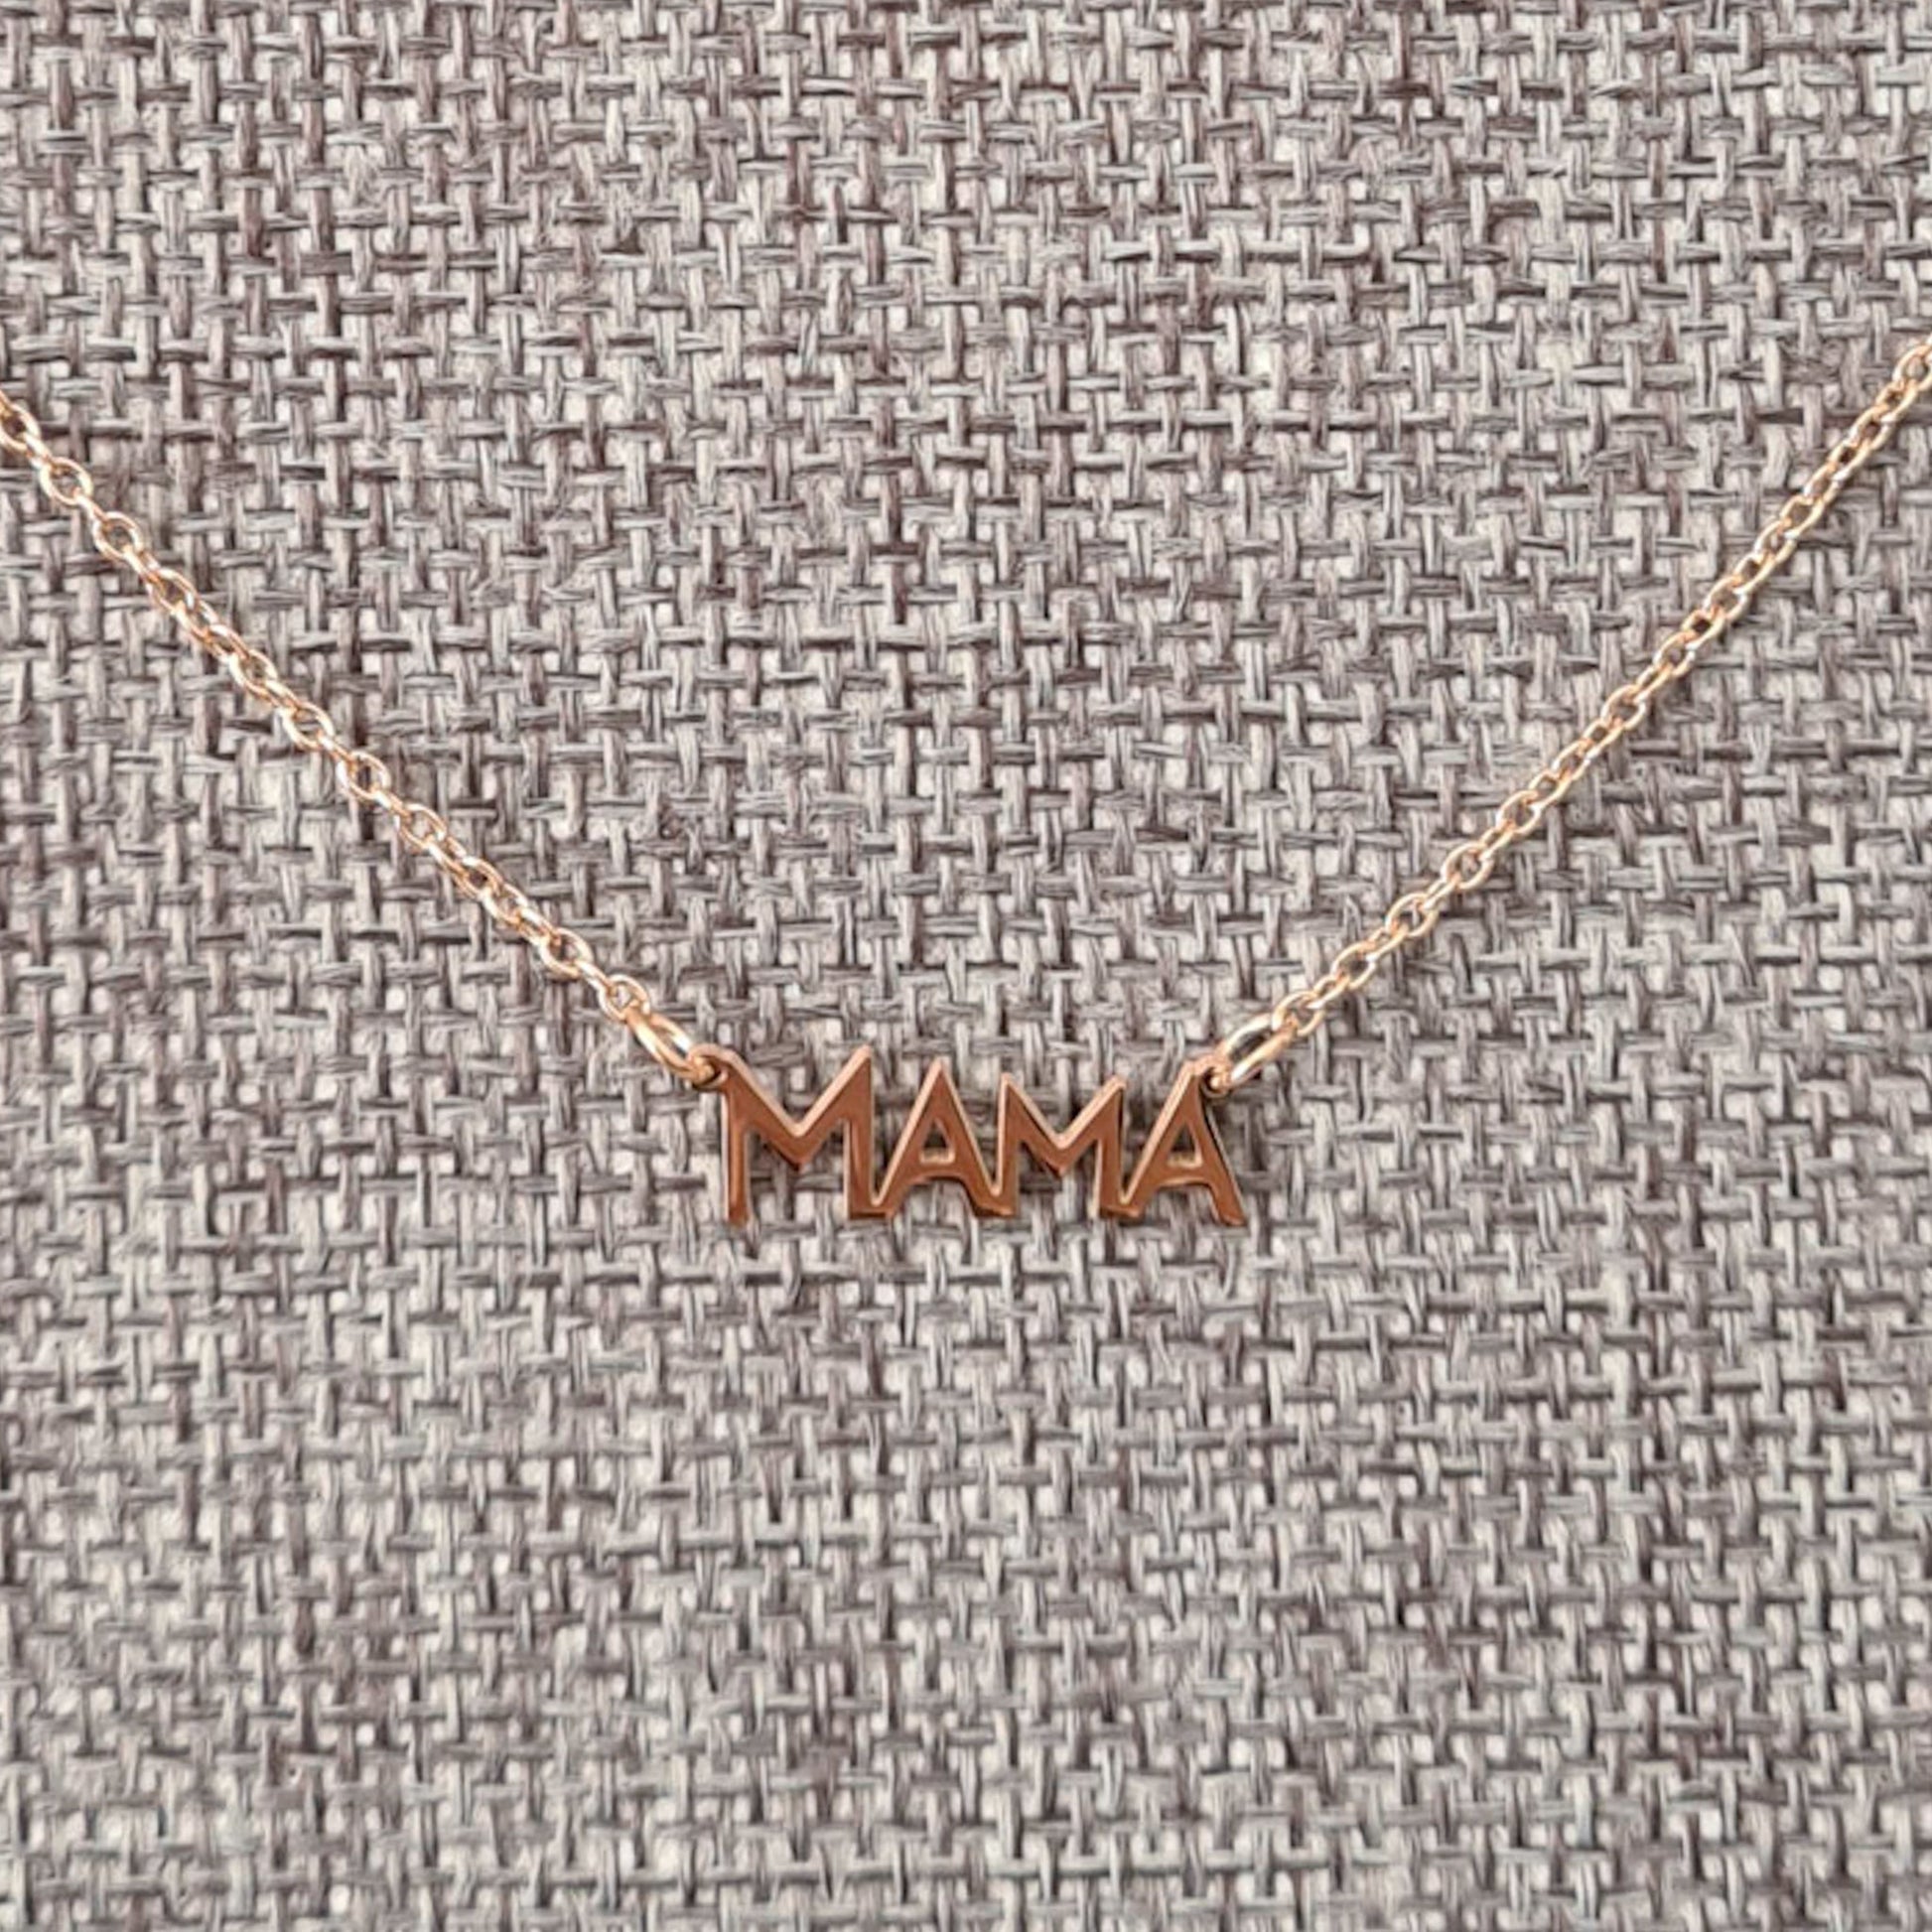 Mama monogram letter necklace